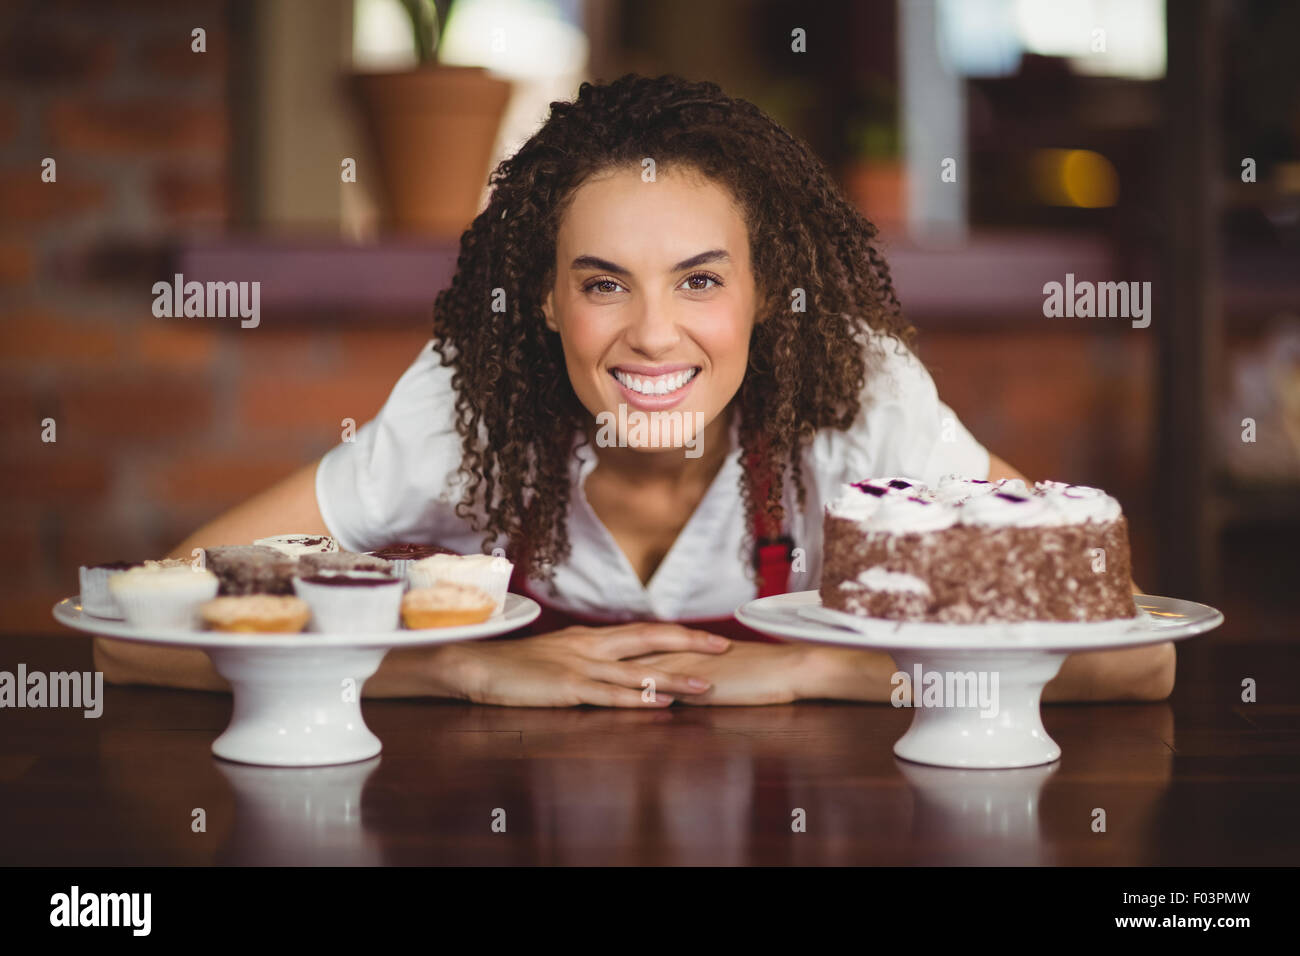 Waitress bending over chocolate cake and cupcakes Stock Photo